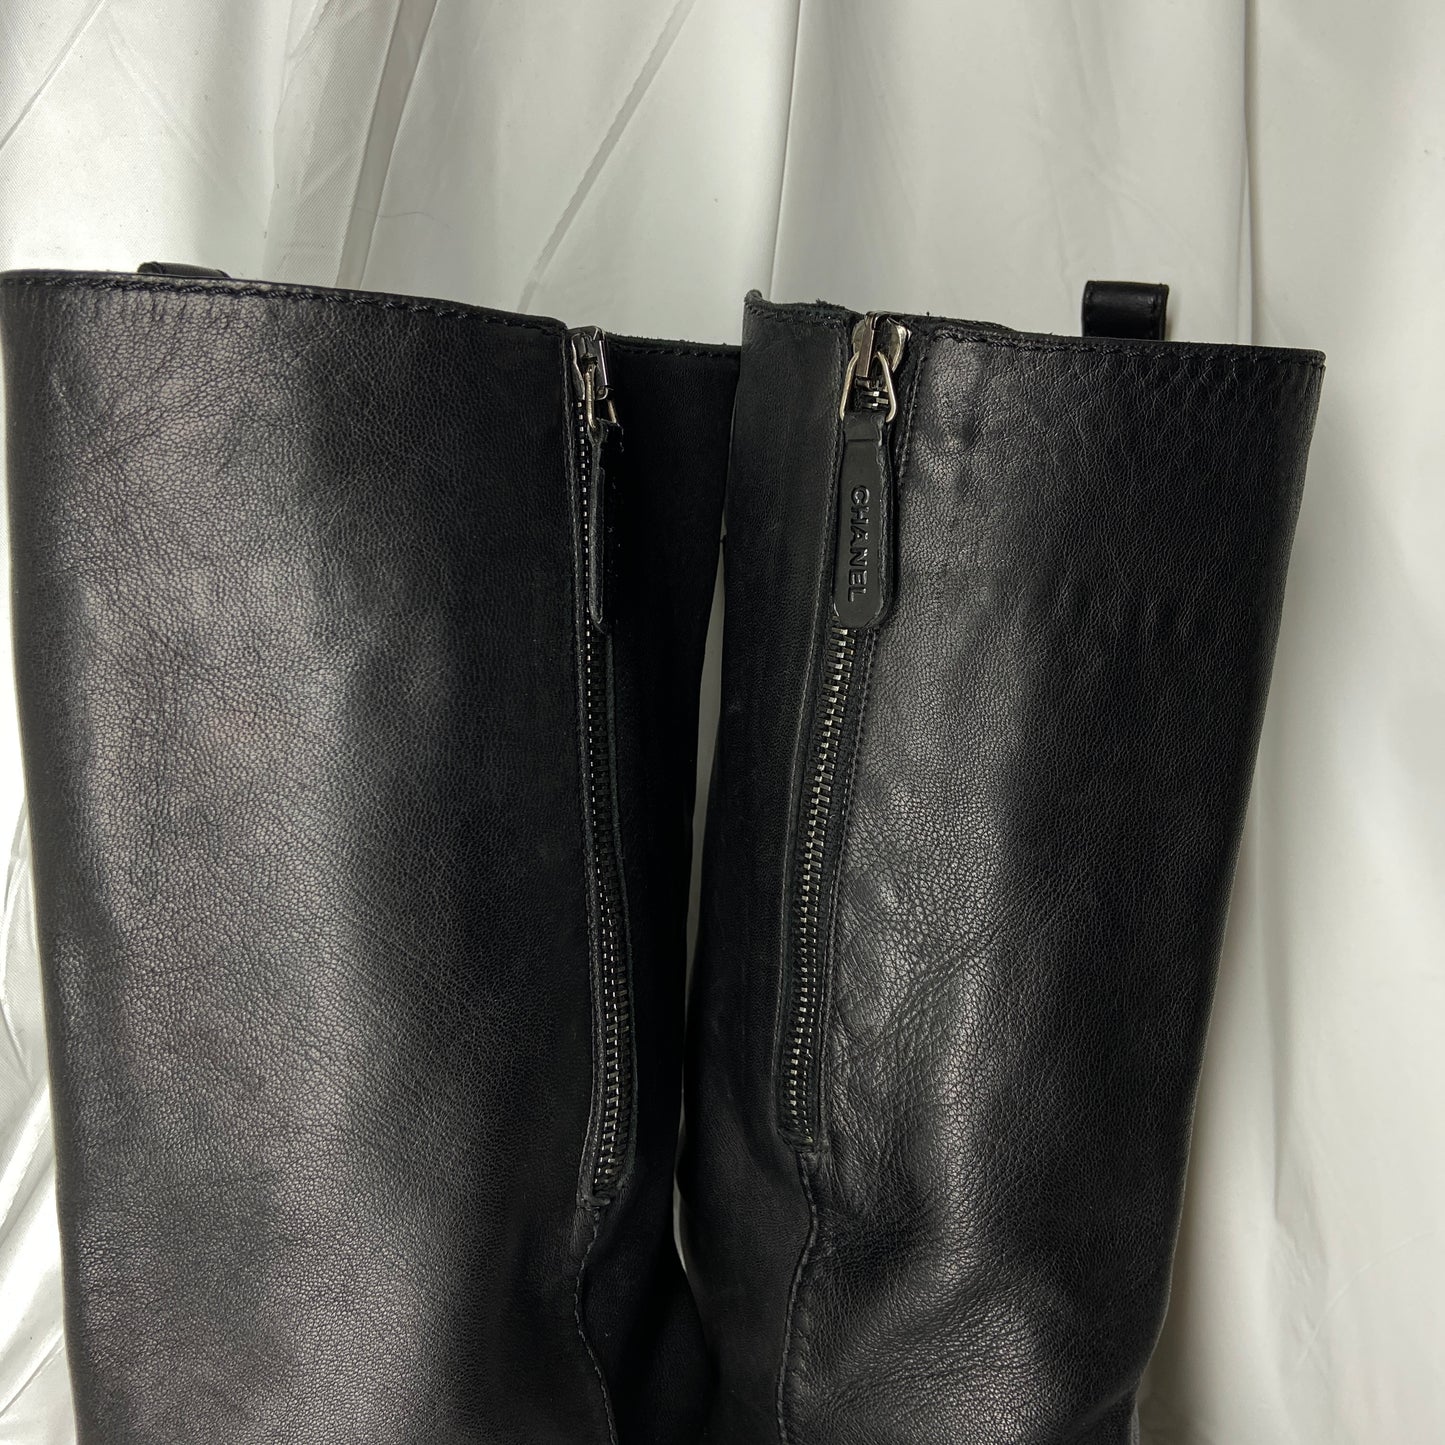 Chanel calf leather knee high heel boots 39